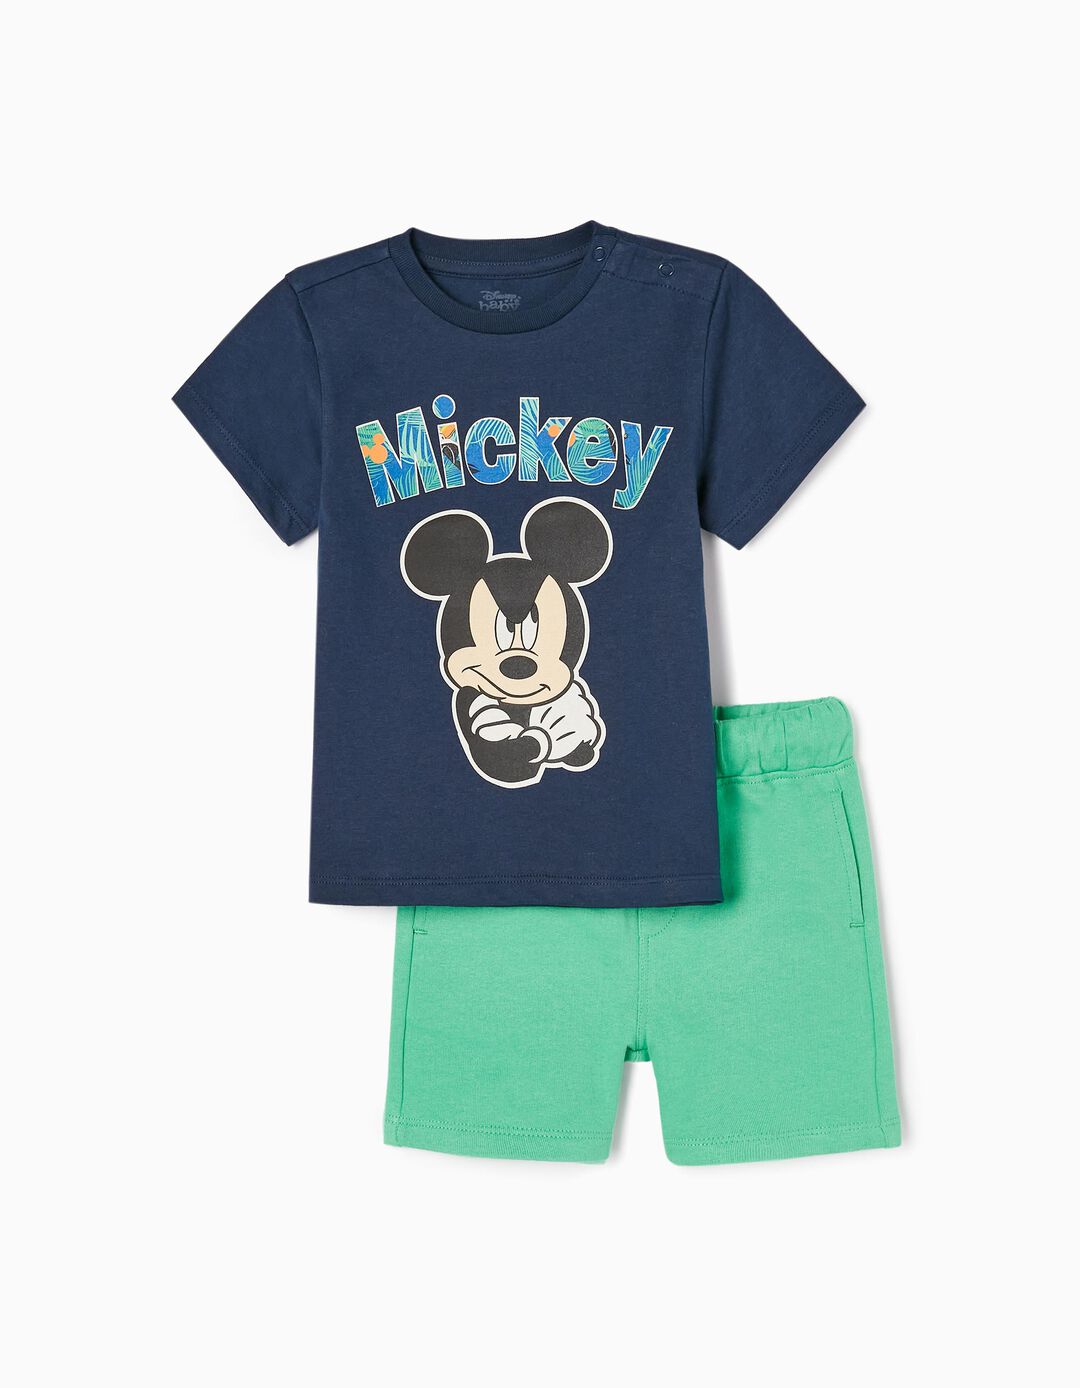 T-shirt + Shorts Set for Baby Boys 'Mickey', Dark Blue/Green